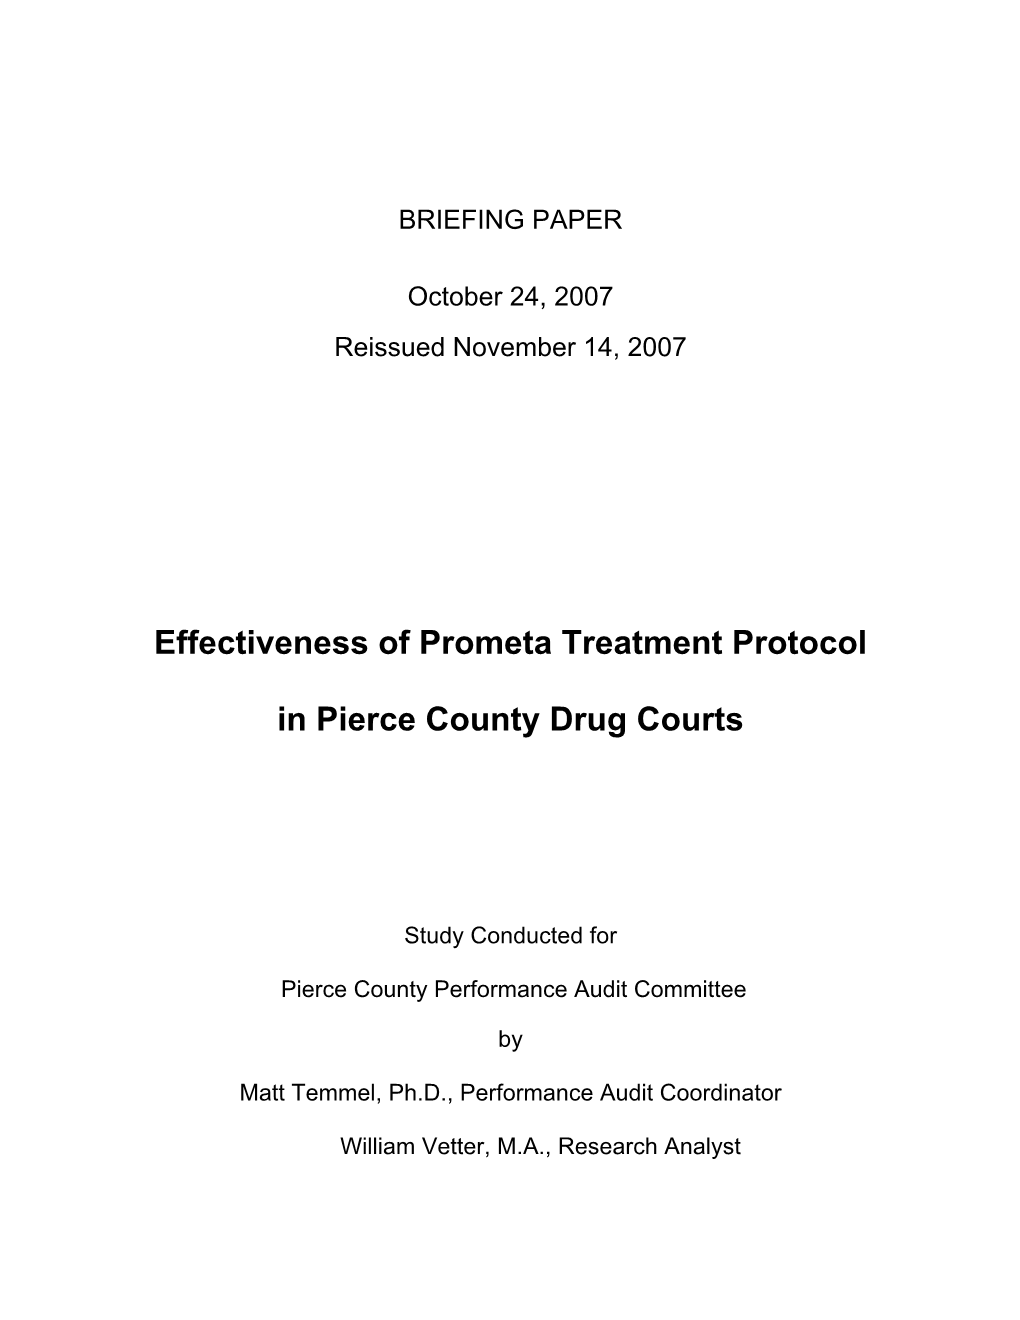 Effectiveness of Prometa Treatment Protocol in Pierce County Drug Courts